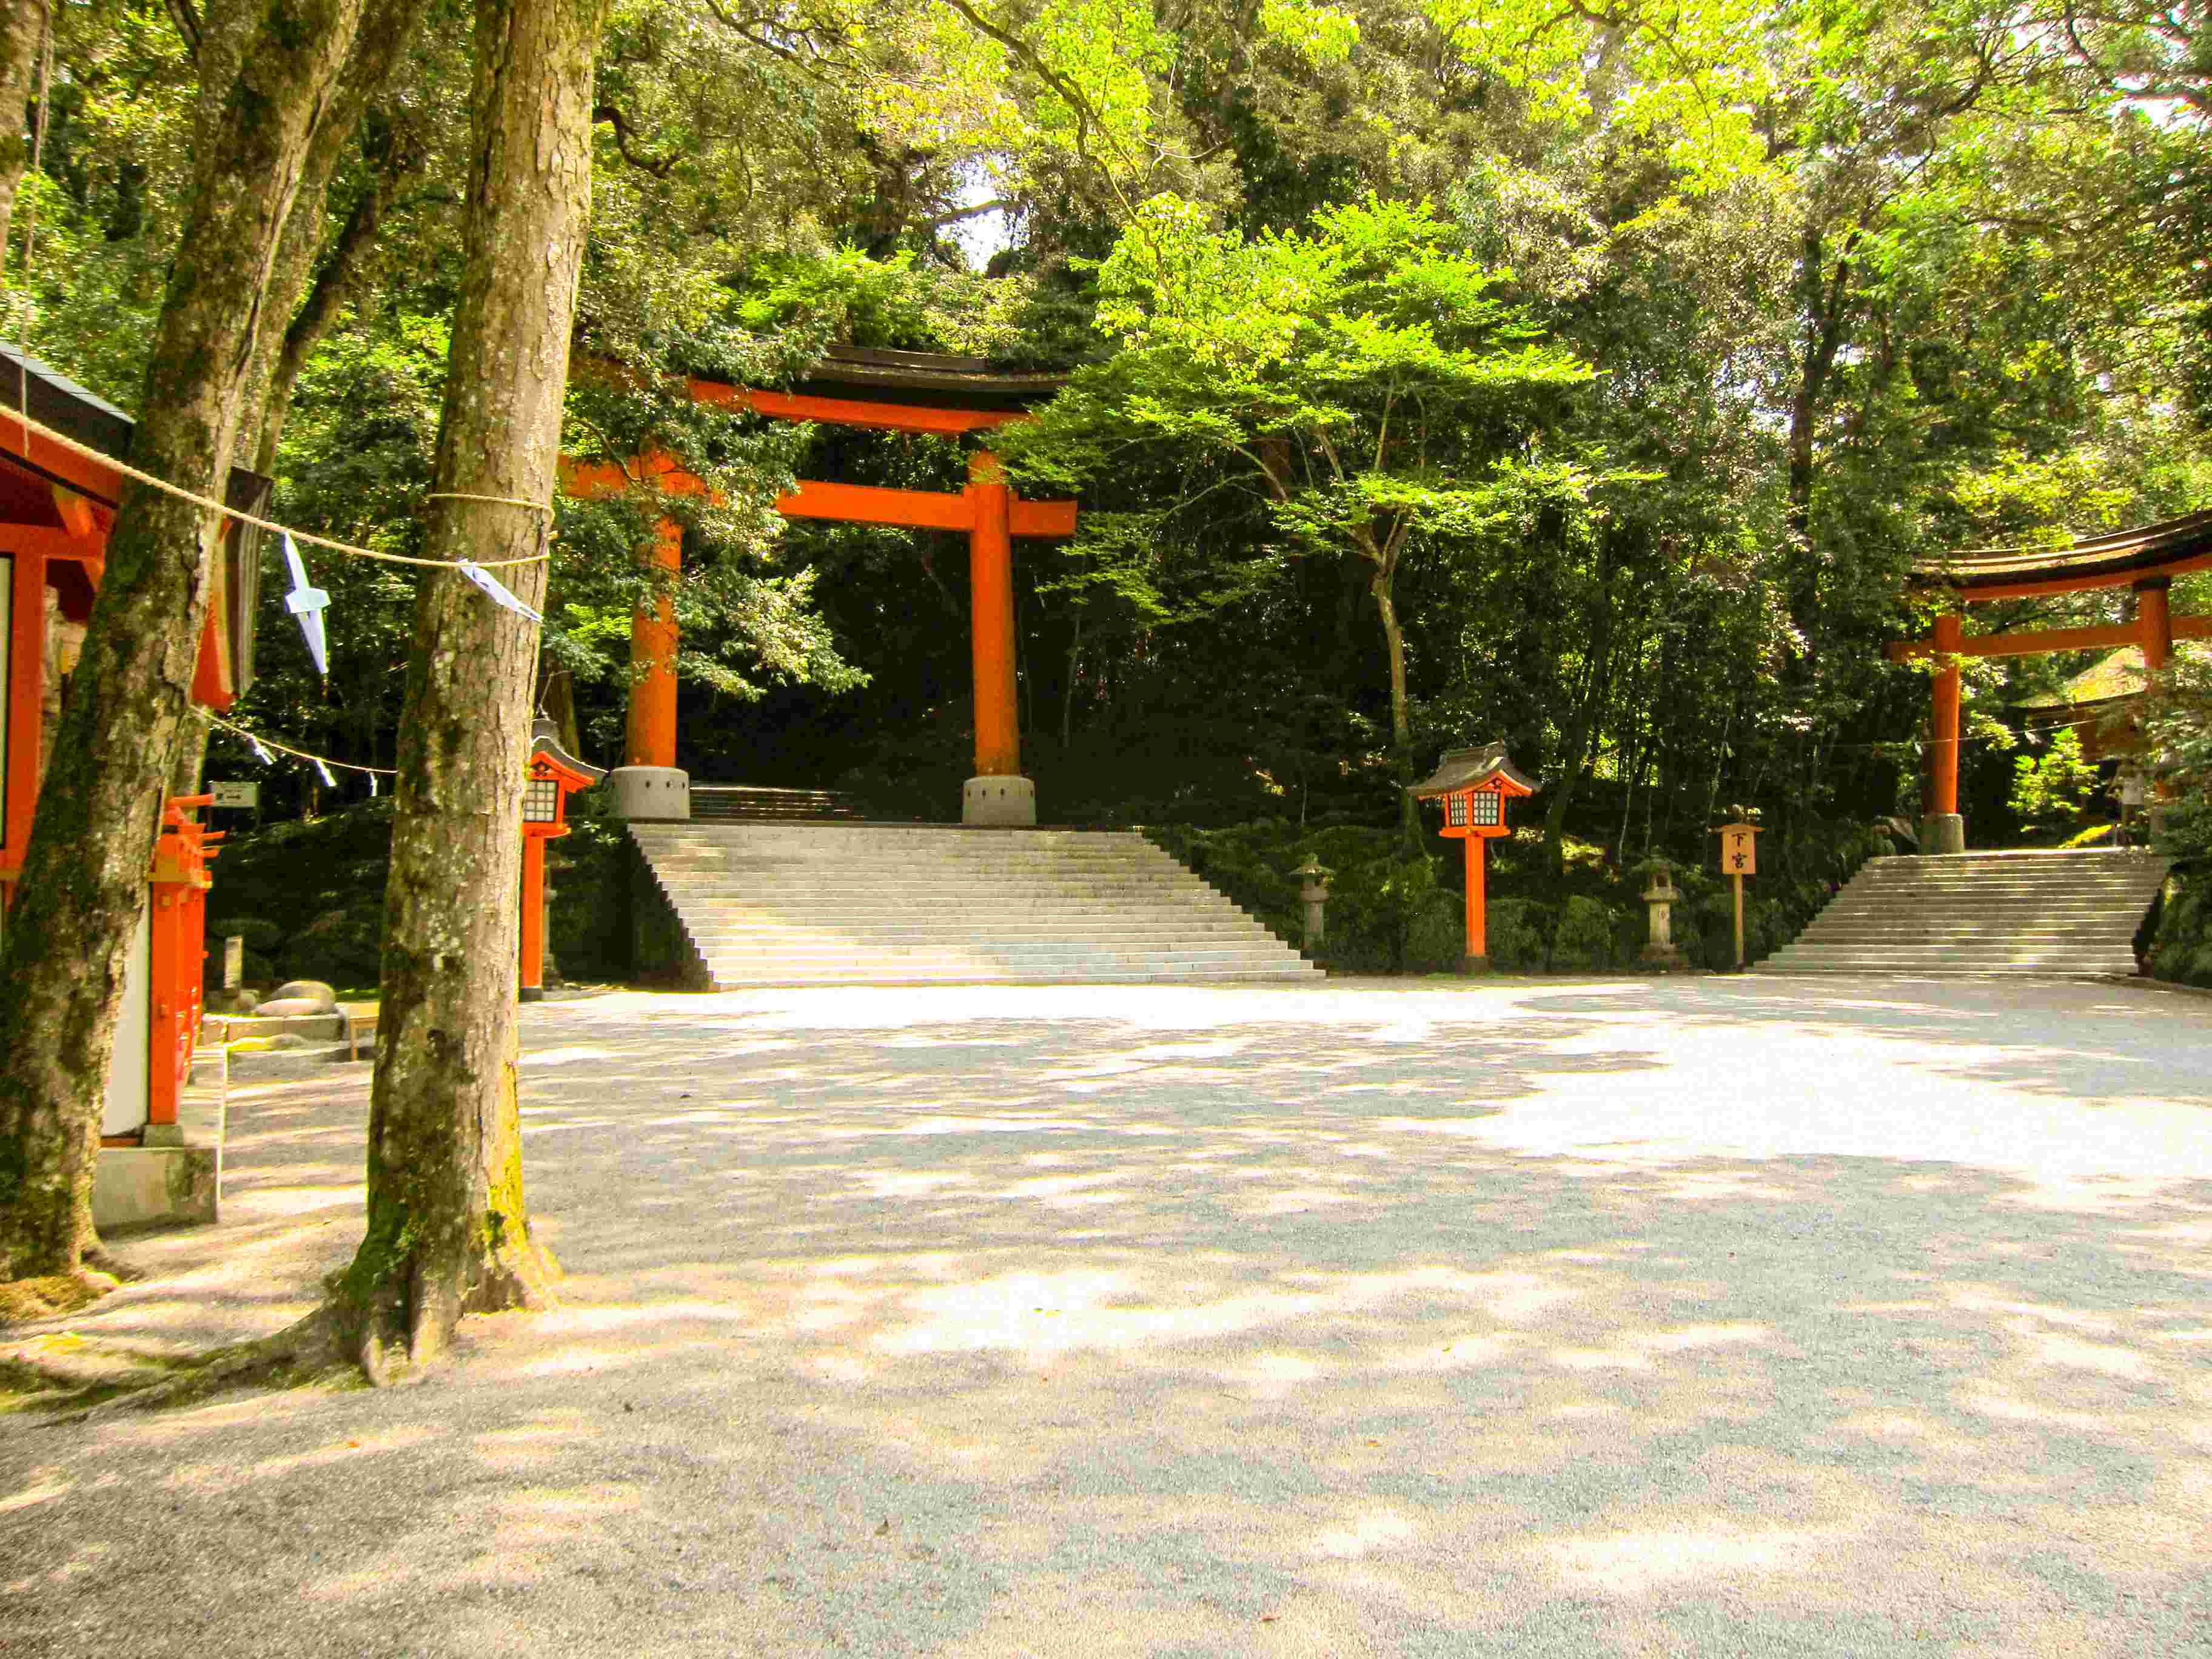 Photogenic scenery within Usa Jingū shrine complex